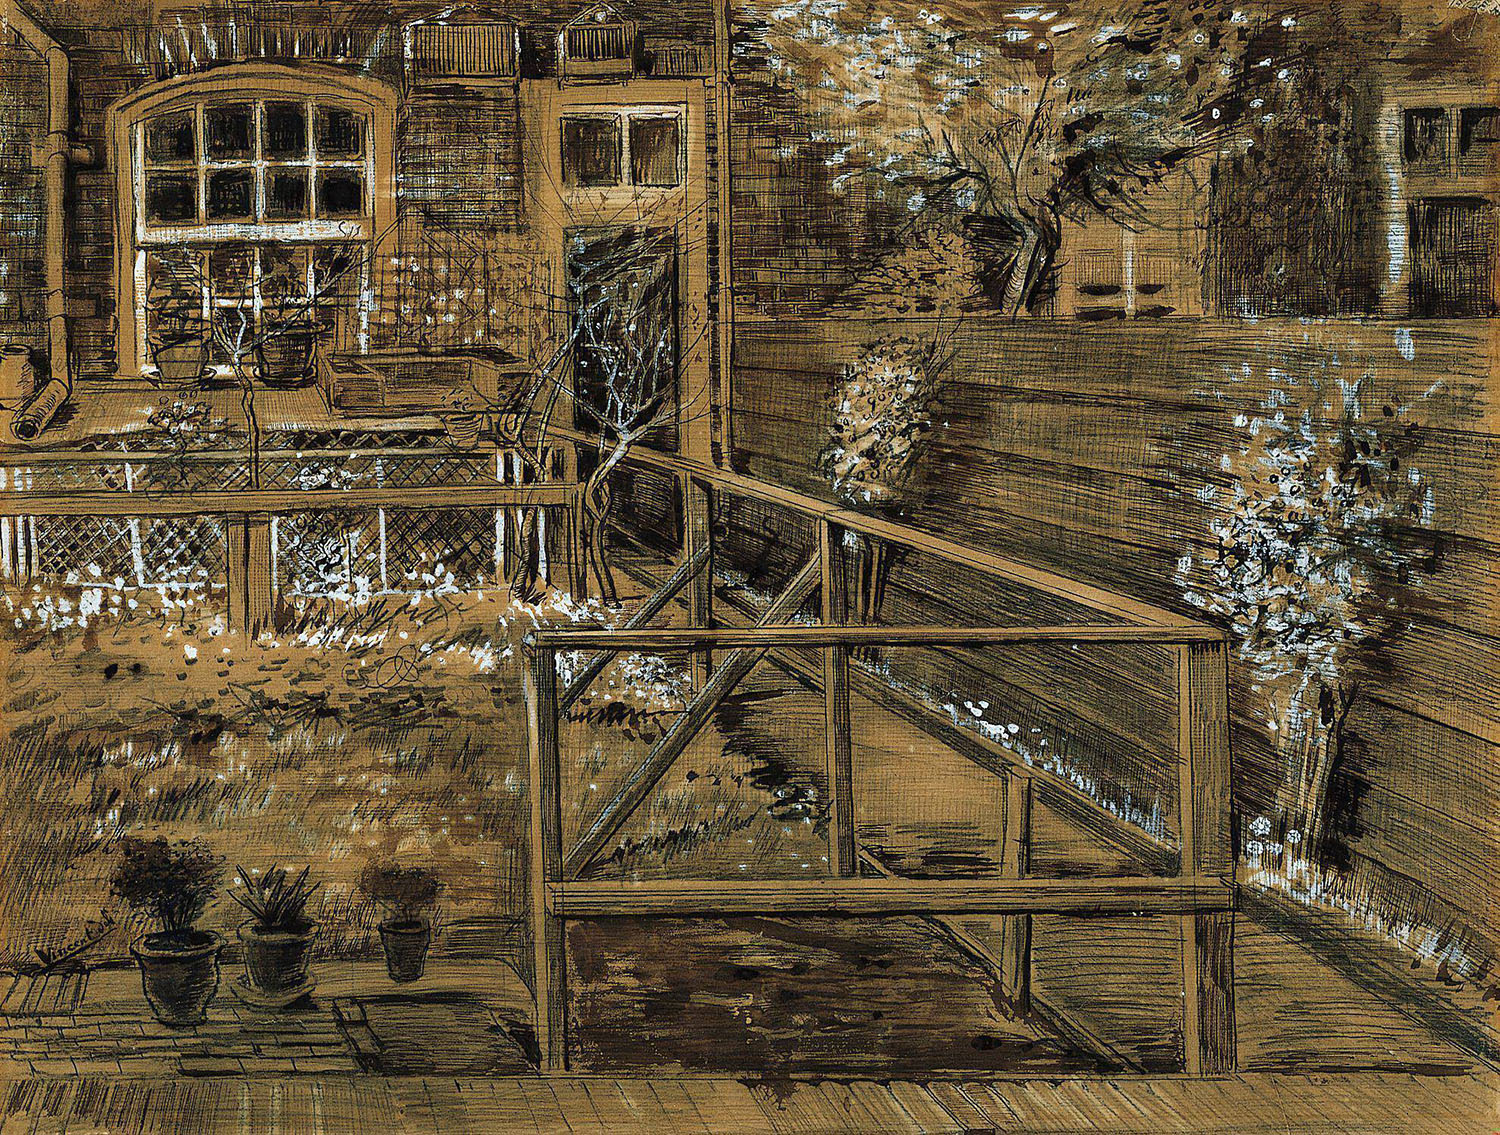 Винсент Ван Гог. "Сад на заднем дворе матери Винсента в Гааге". 1882. Музей искусств Нортона Саймона, Пасадена.